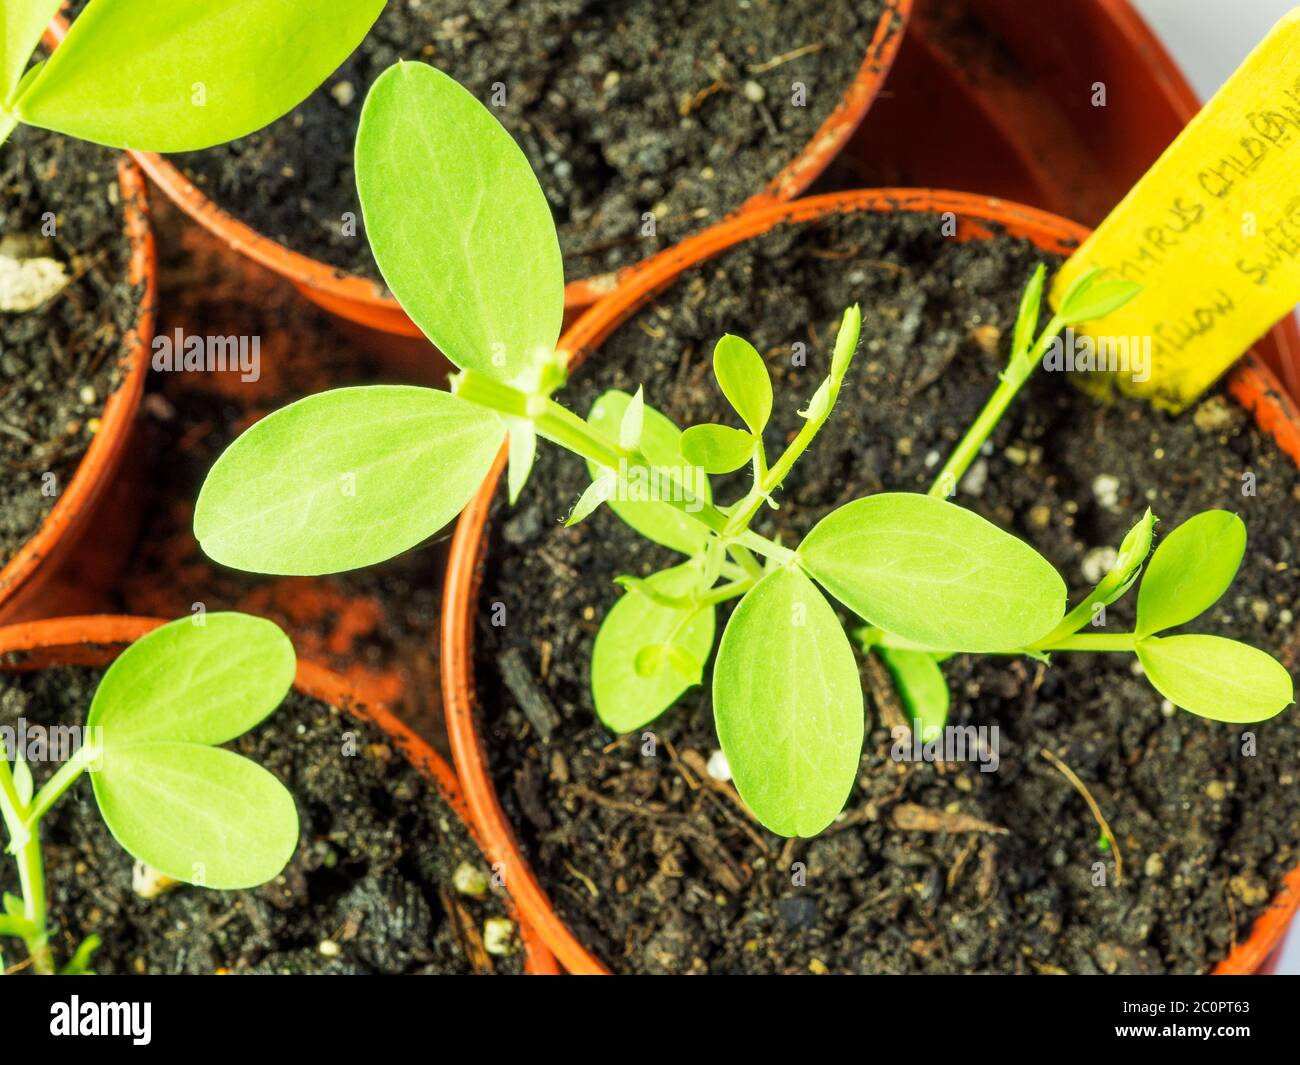 Lathyrus chloranthus sweet peas seedlings in plant pots Stock Photo